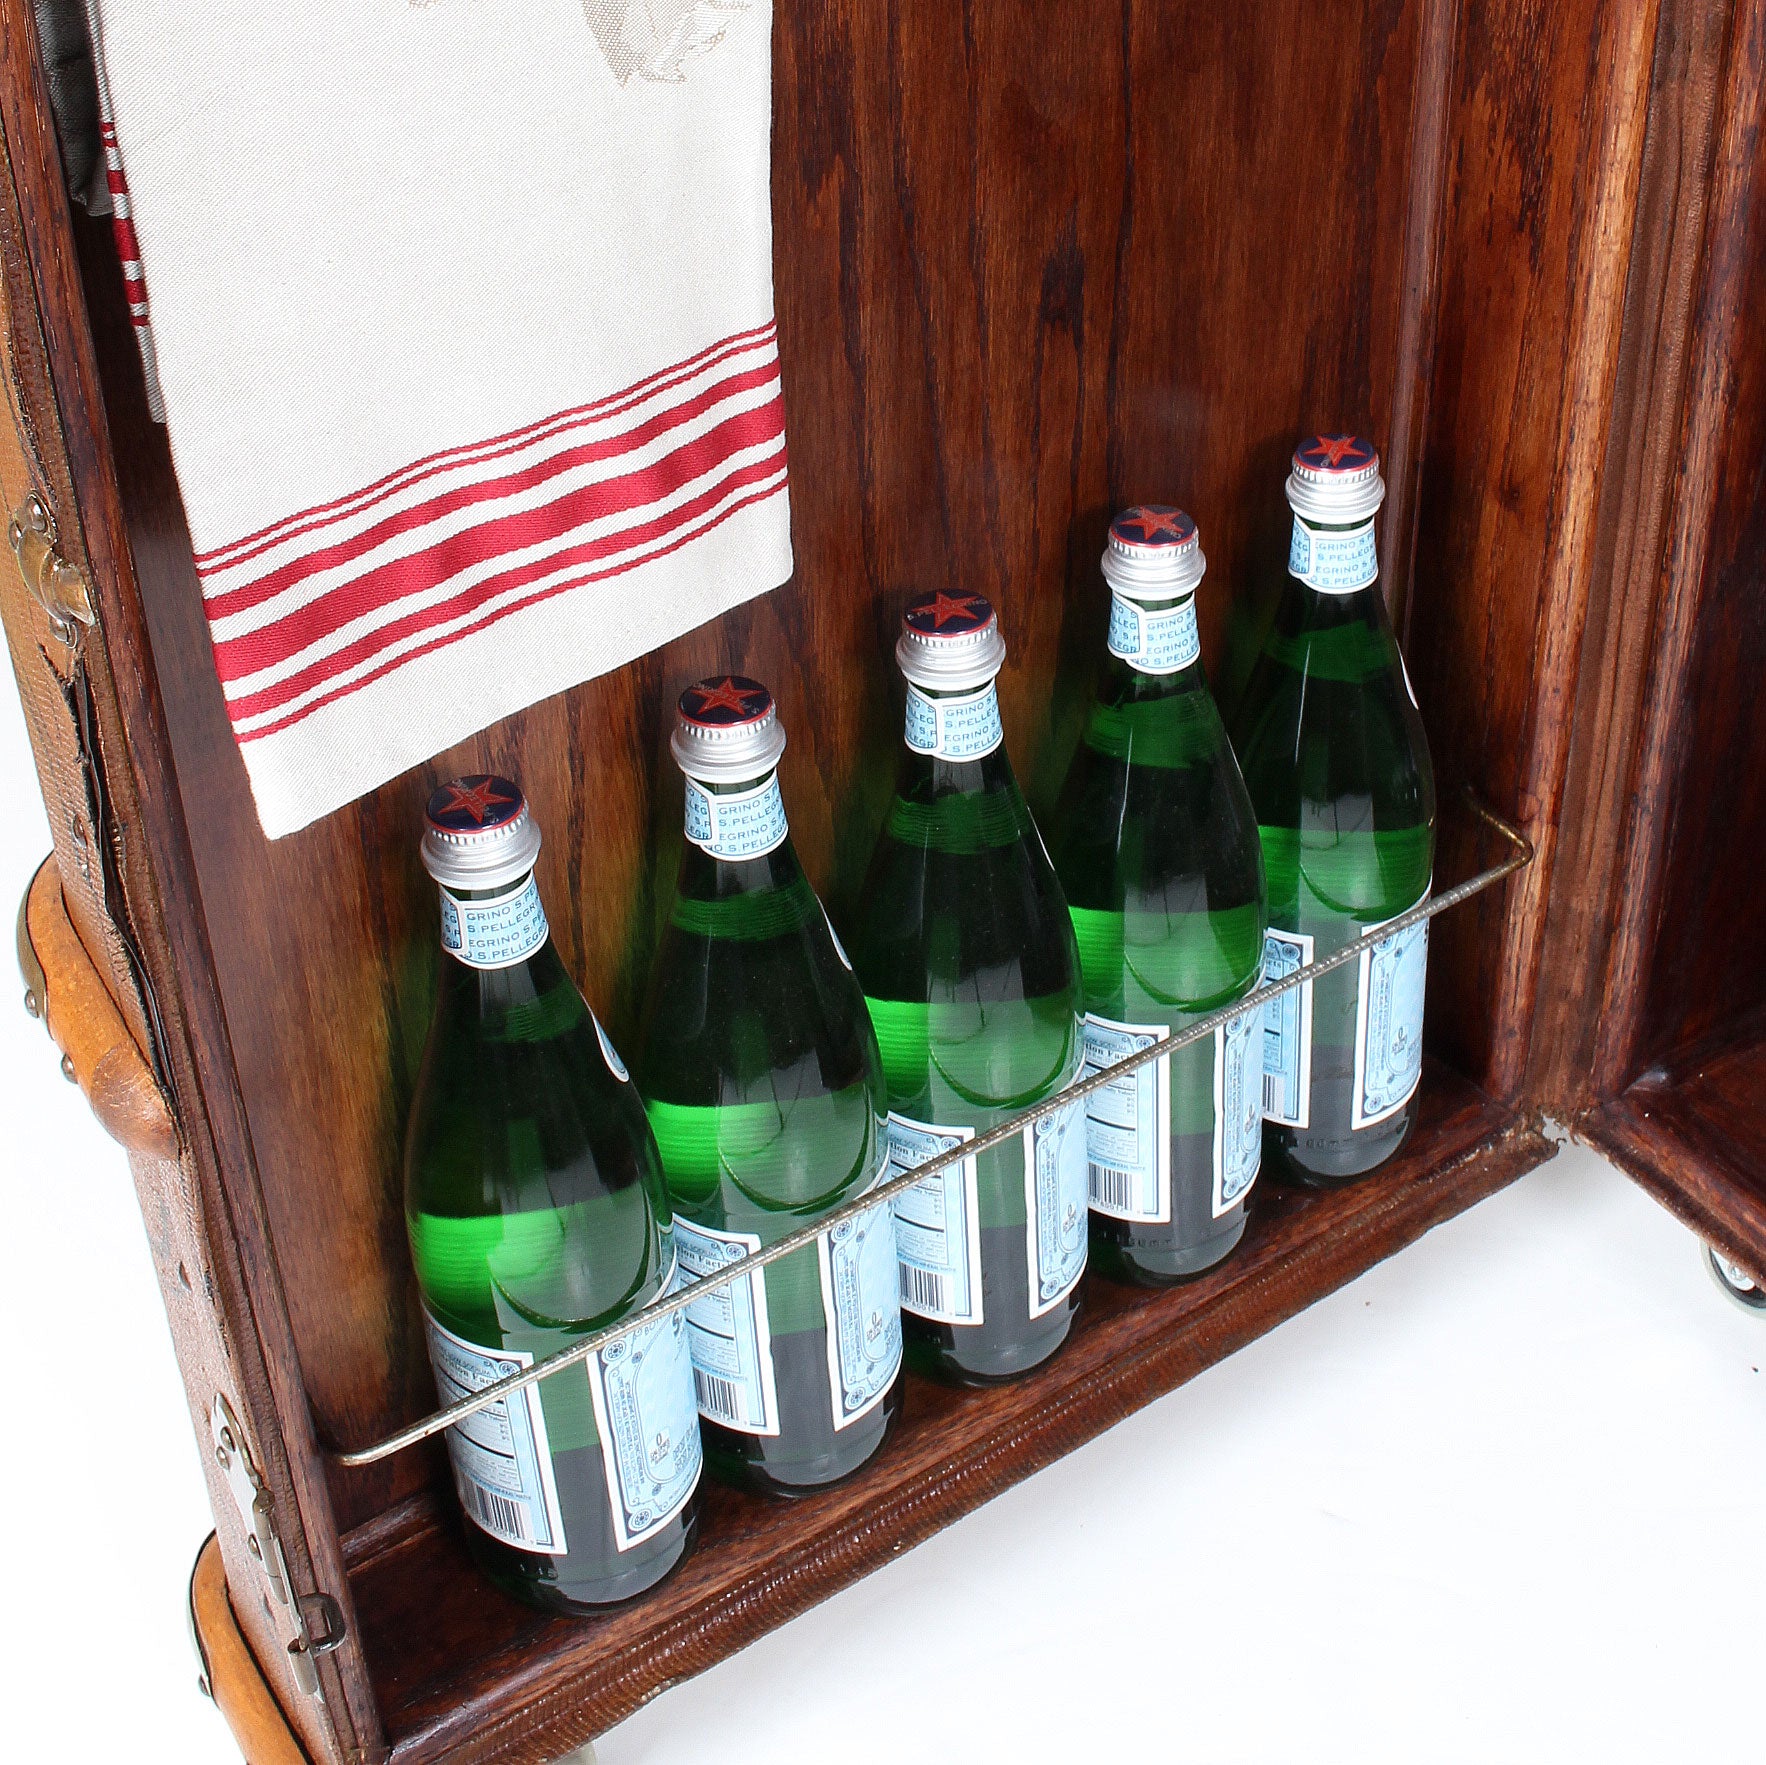 Steamer Trunk Bar Cabinet - Products, bookmarks, design